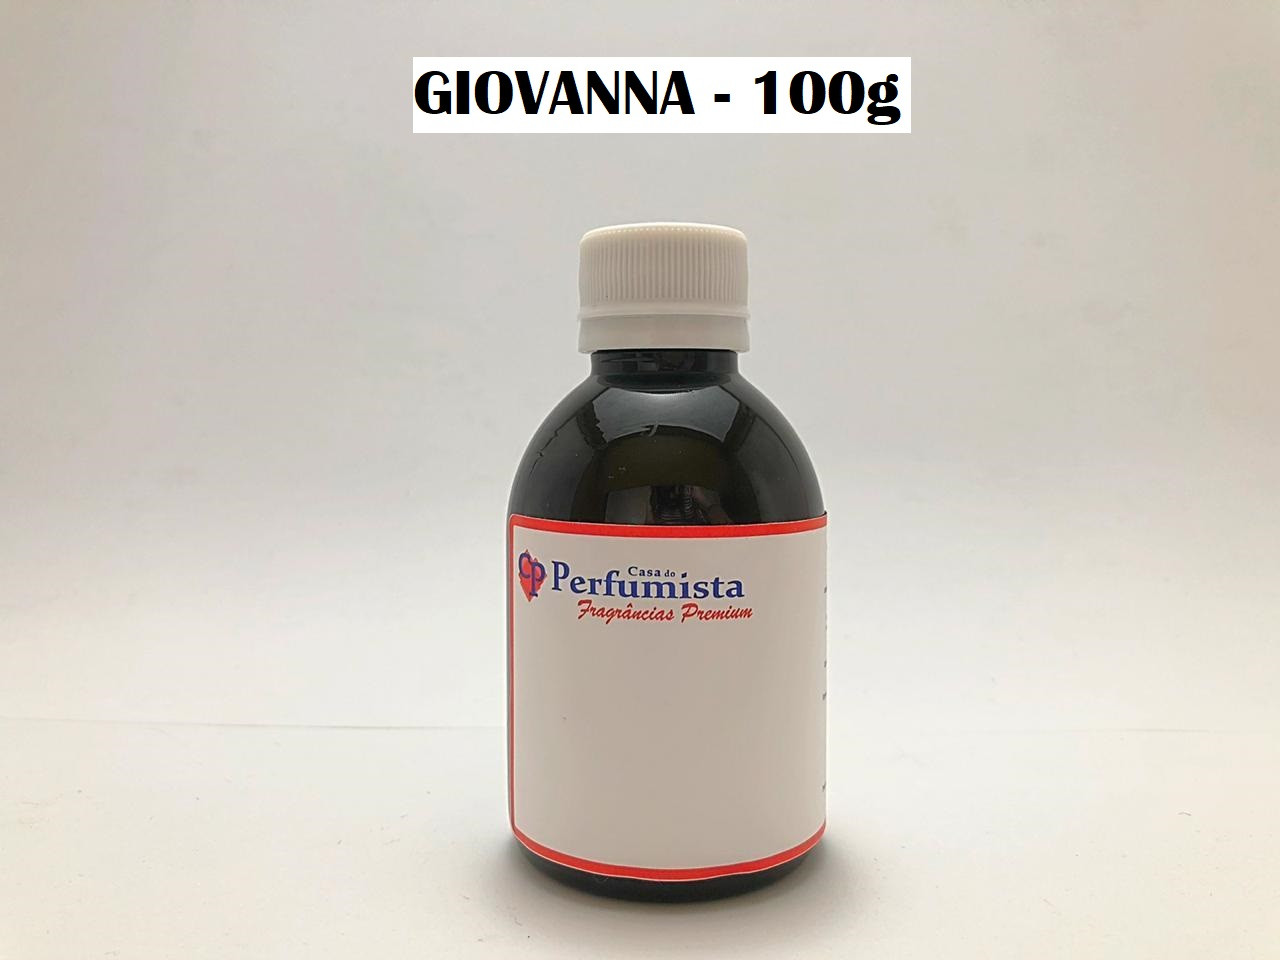 GIOVANNA - 100g